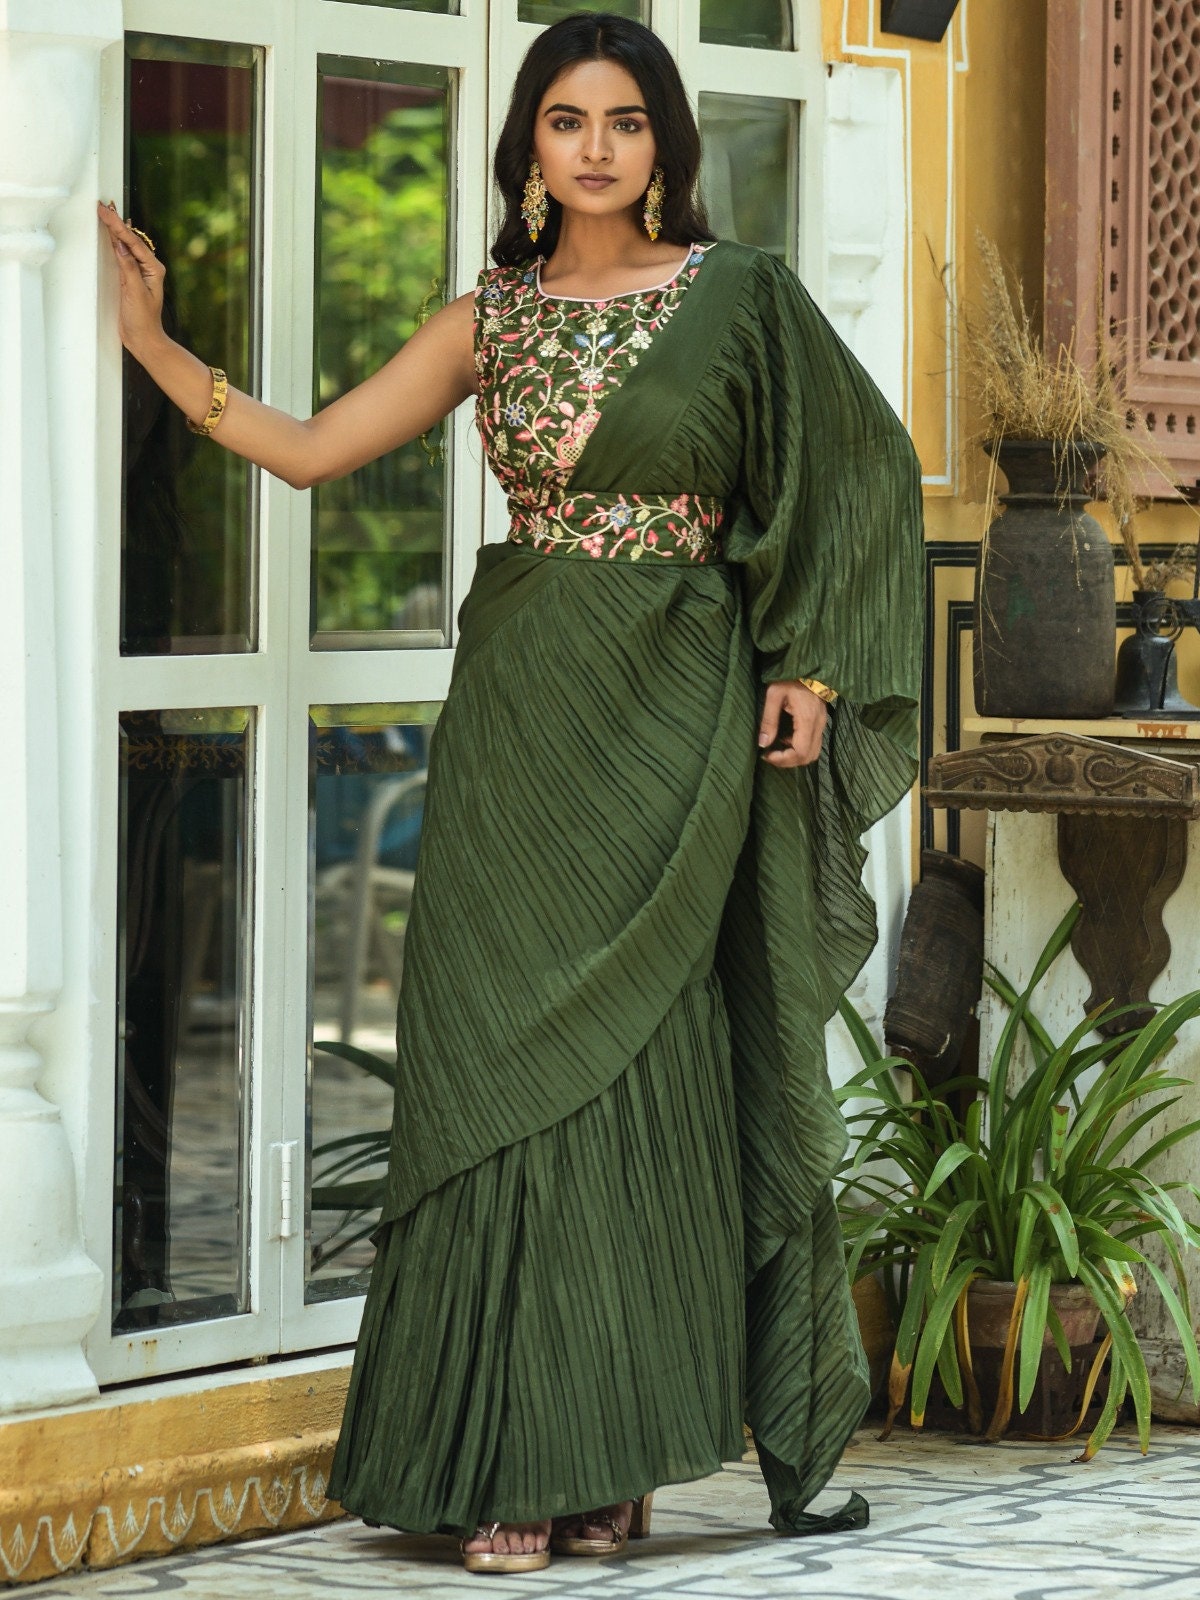 Satin Silk Saree Styles To Your Summer Wardrobe, Threads - WeRIndia